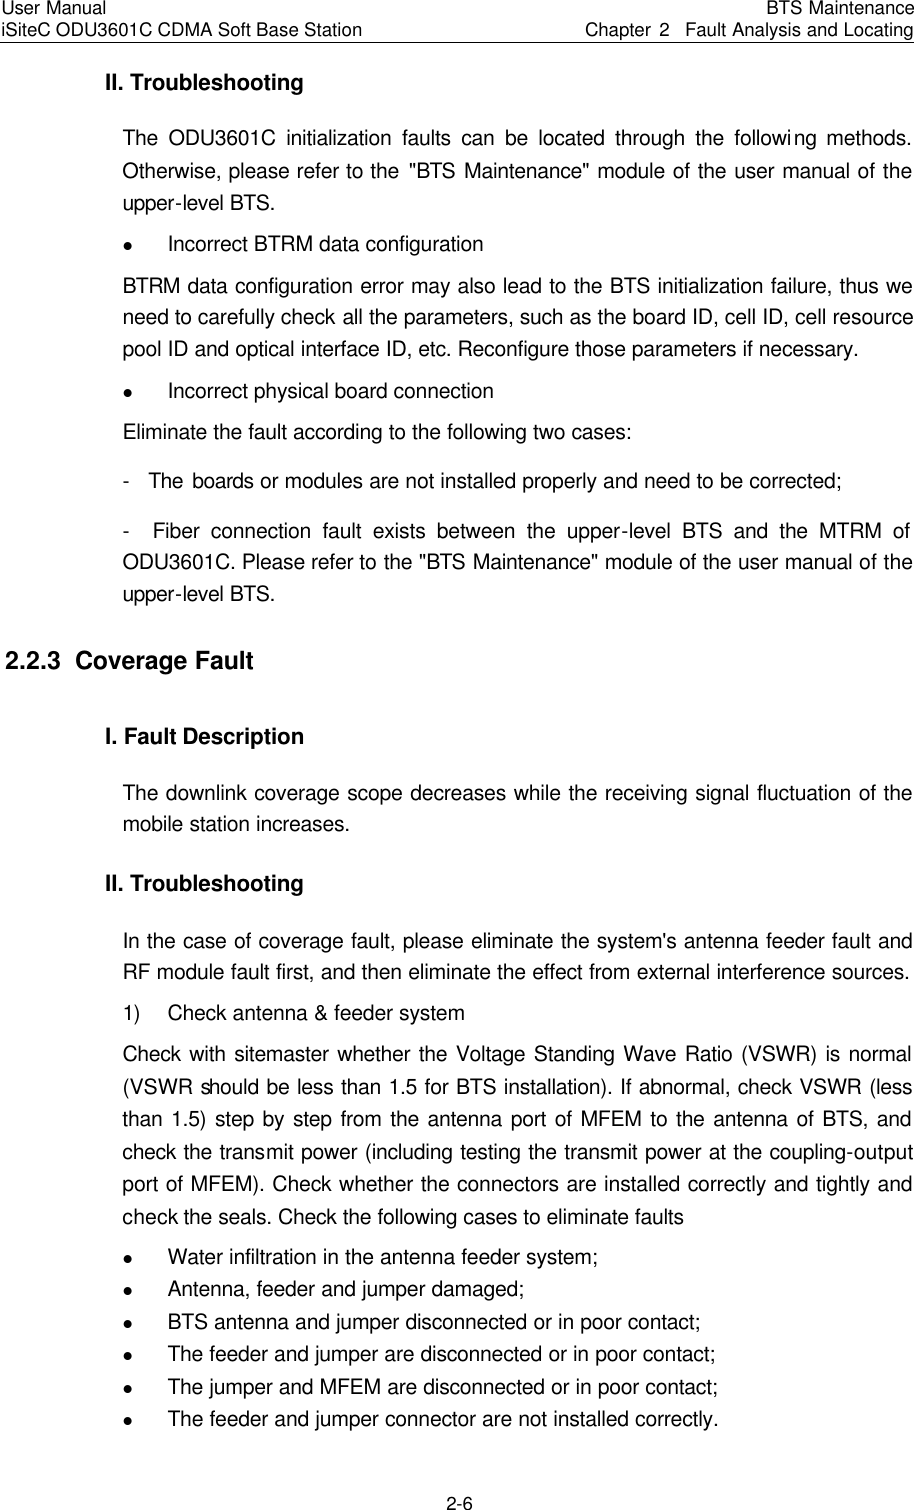 Page 90 of Huawei Technologies ODU3601C-800 CDMA Base Station User Manual 2